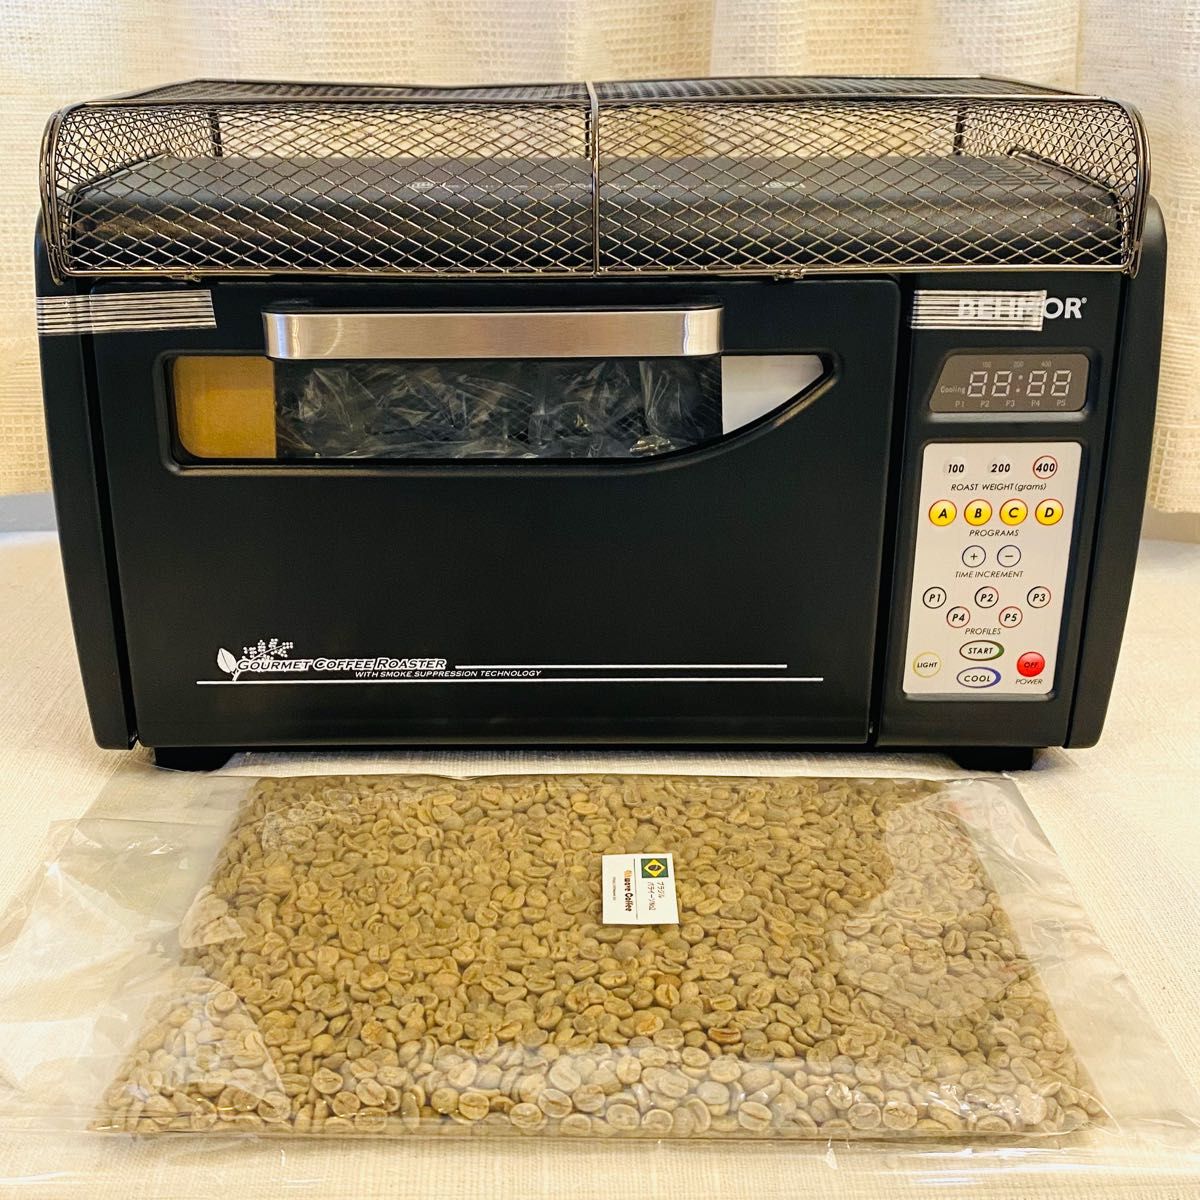 Behmor 2000 AB Plus コーヒー焙煎機 日本仕様 練習用生豆800g付き